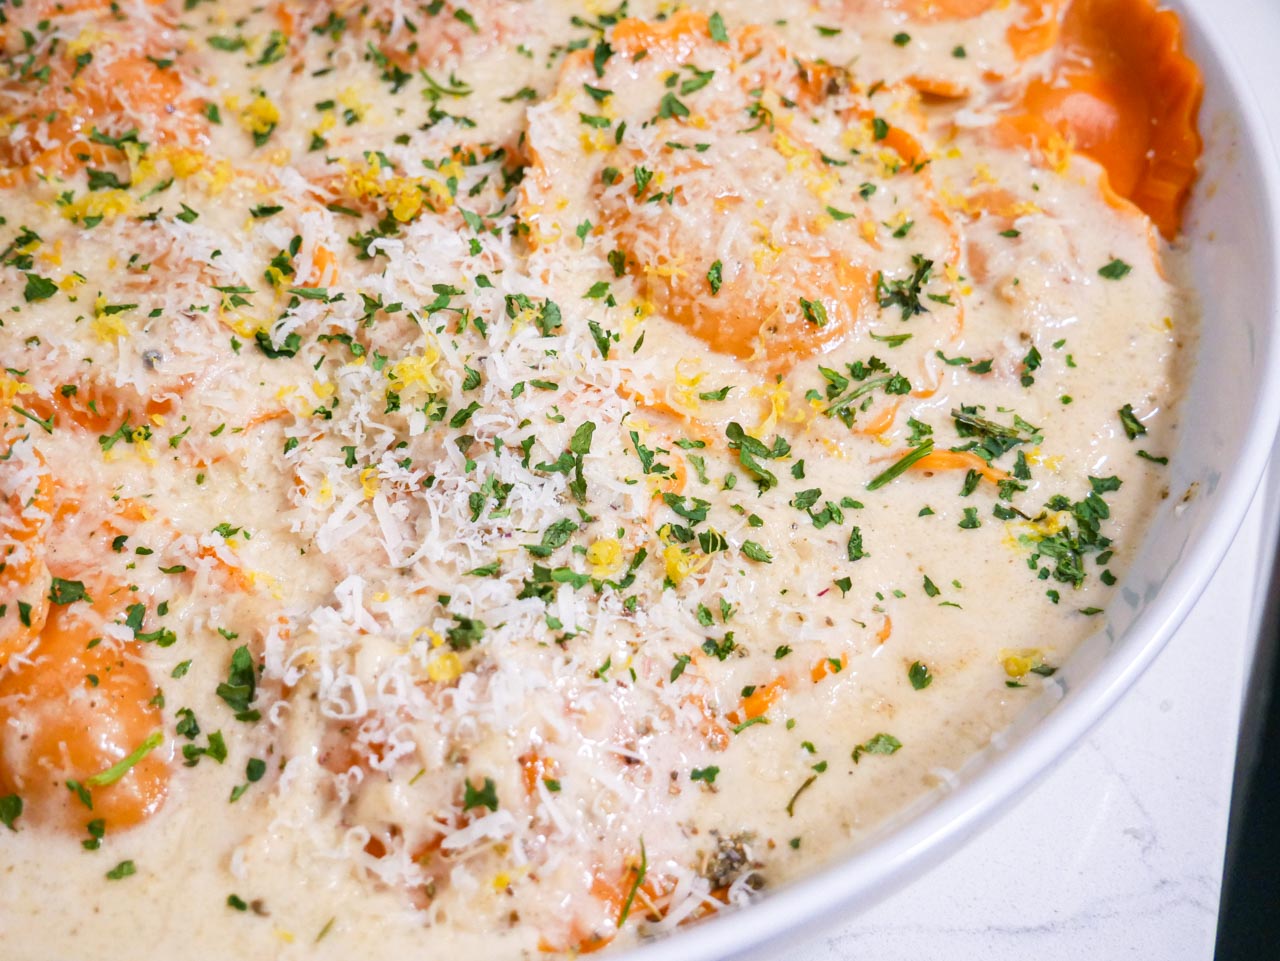 Creamy sage parmesan sauce on butternut squash ravioli in a white bowl on a white countertop.